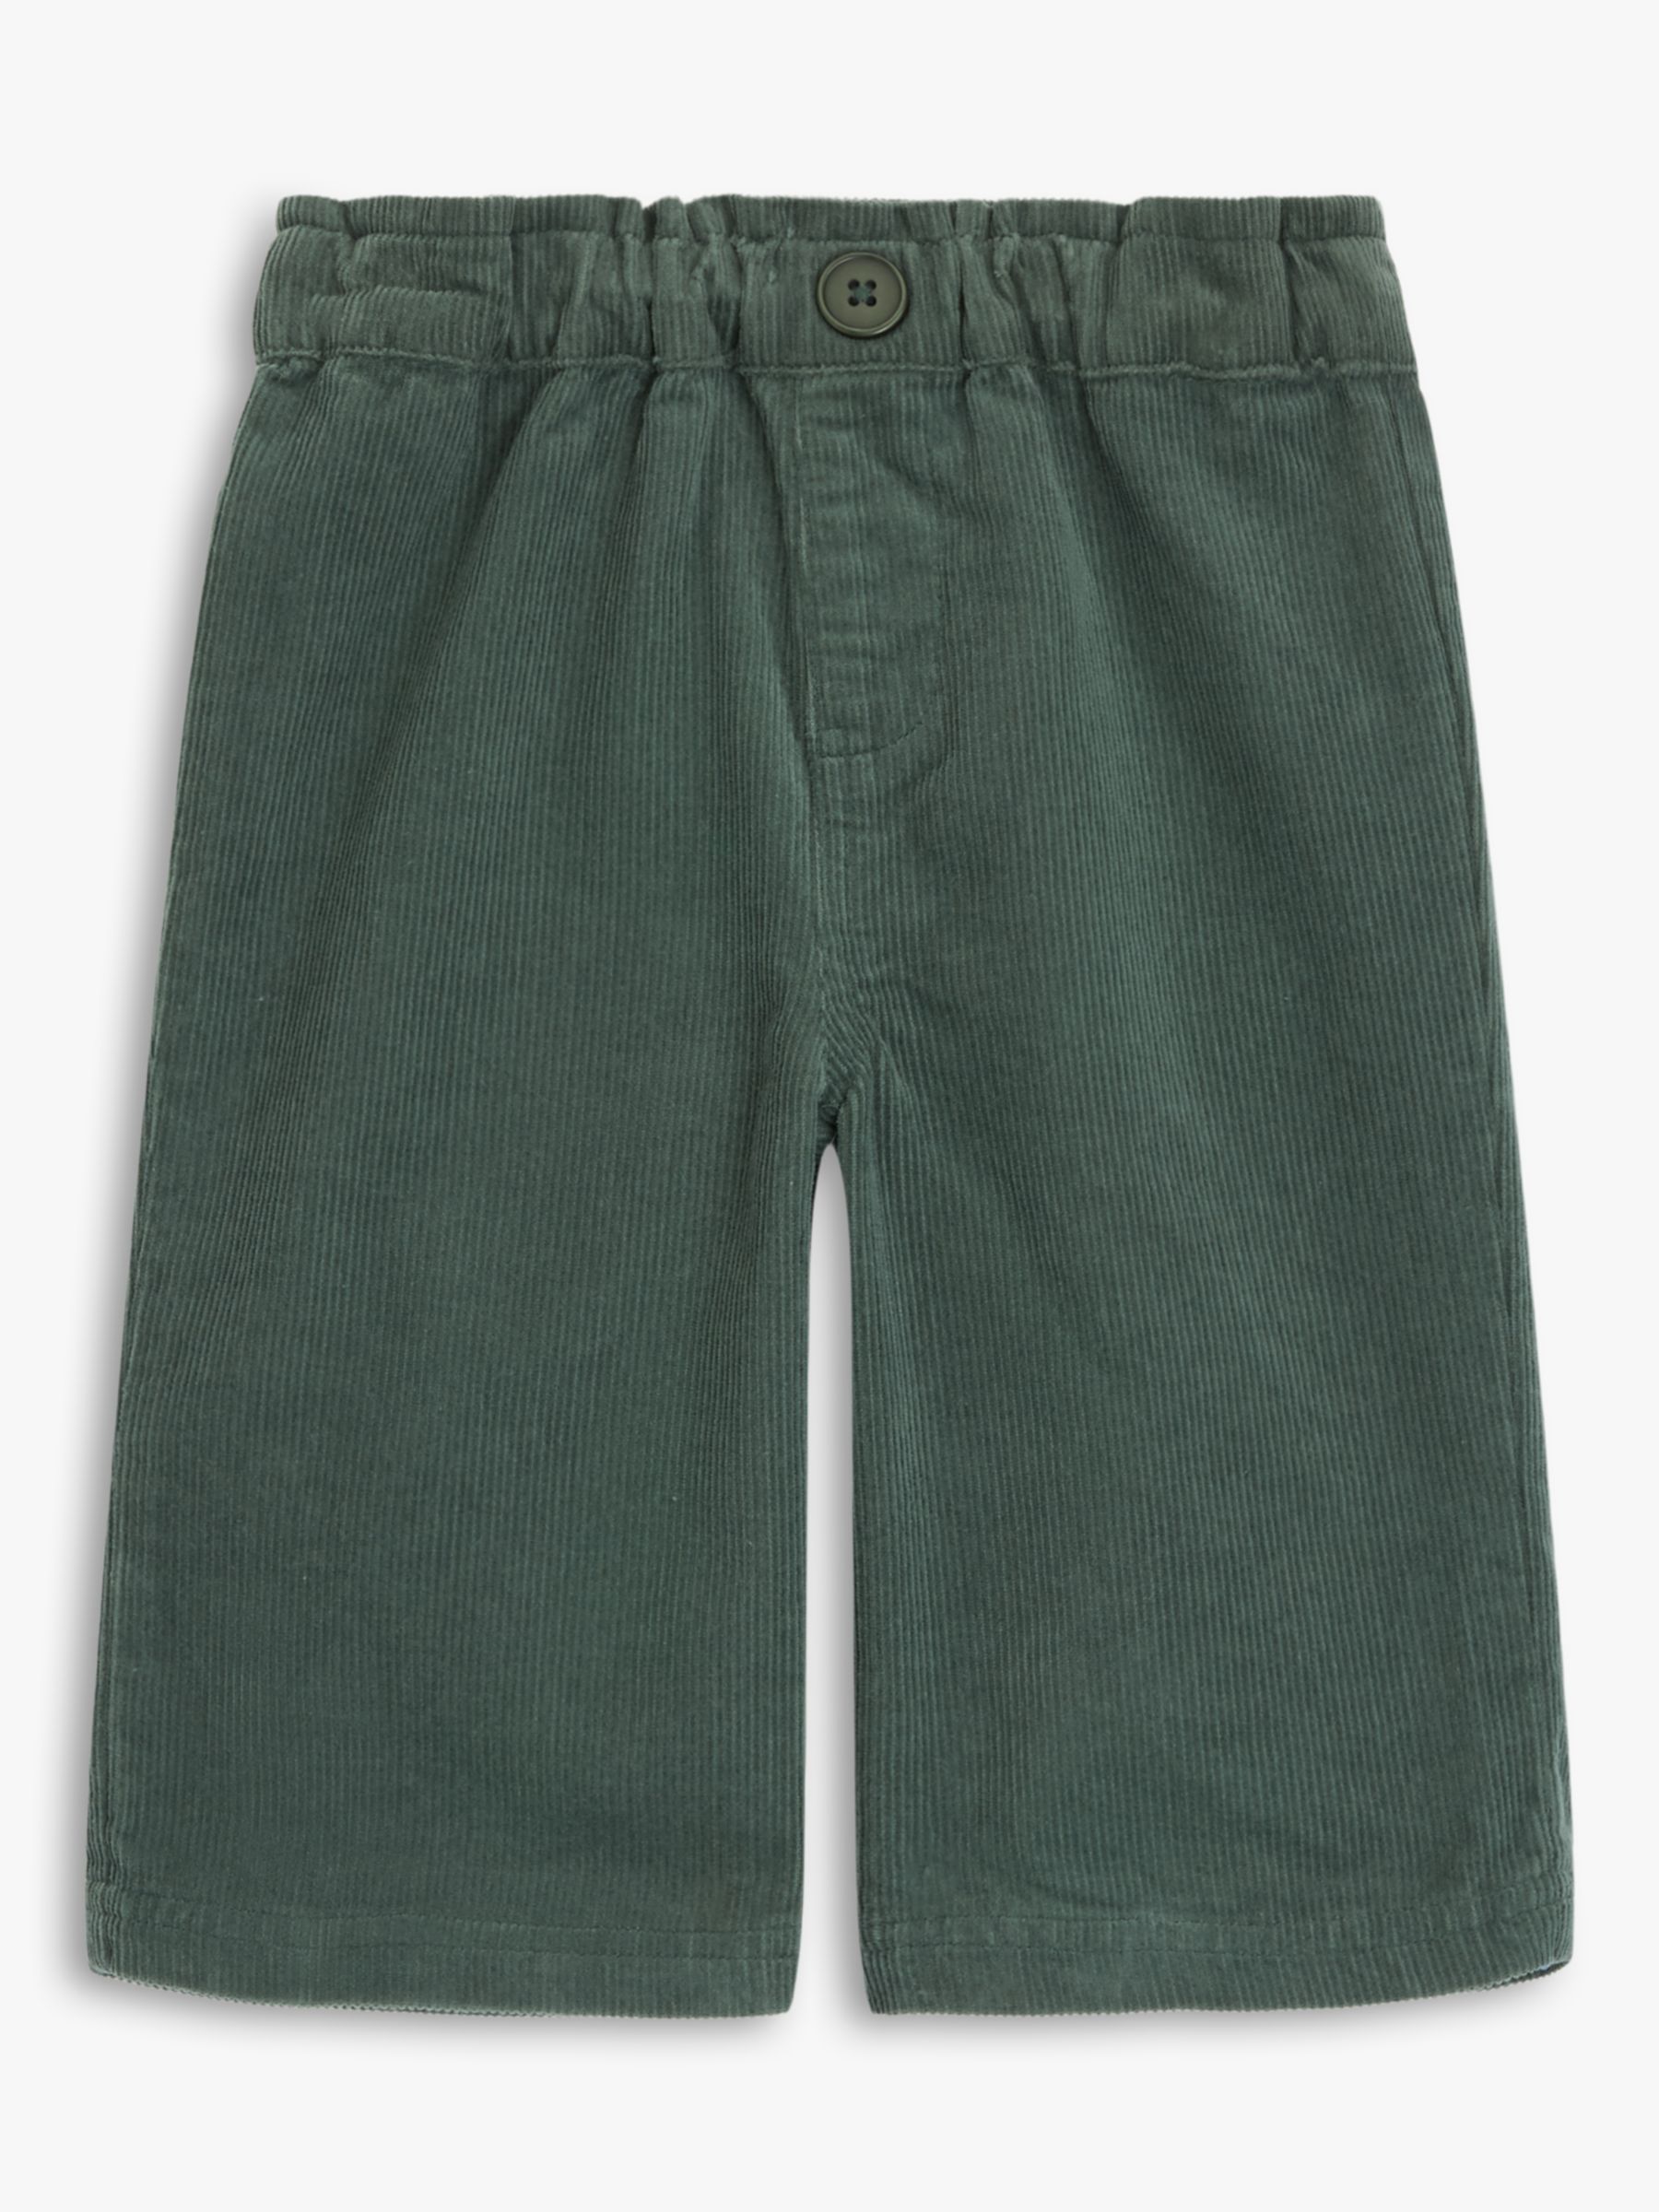 John Lewis Baby Corduroy Trousers, Green, 0-3 months